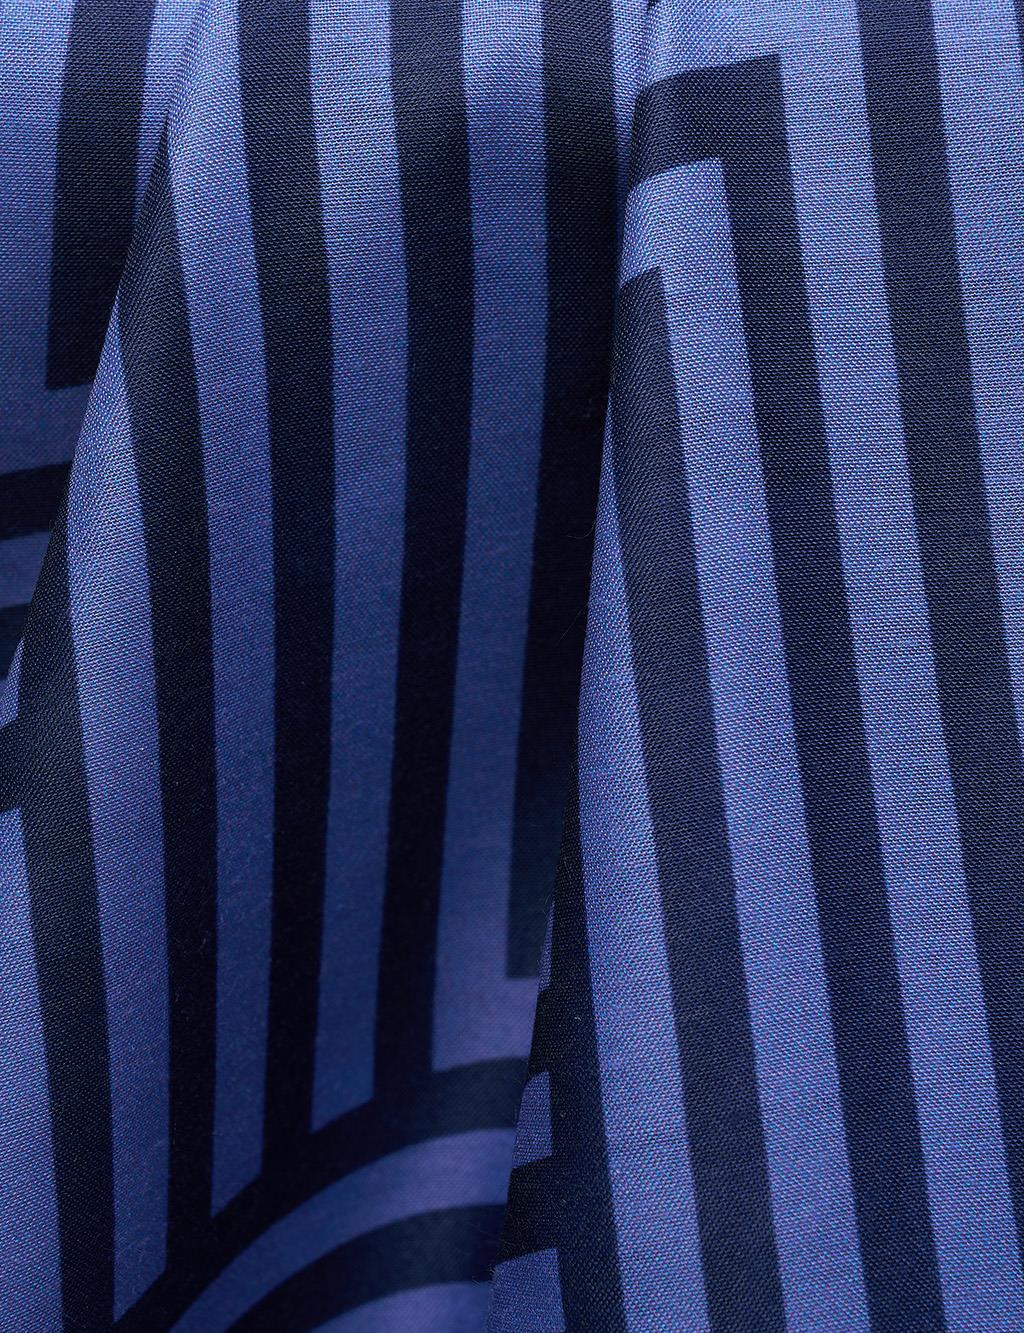 Stripe Patterned Shawl Navy Blue